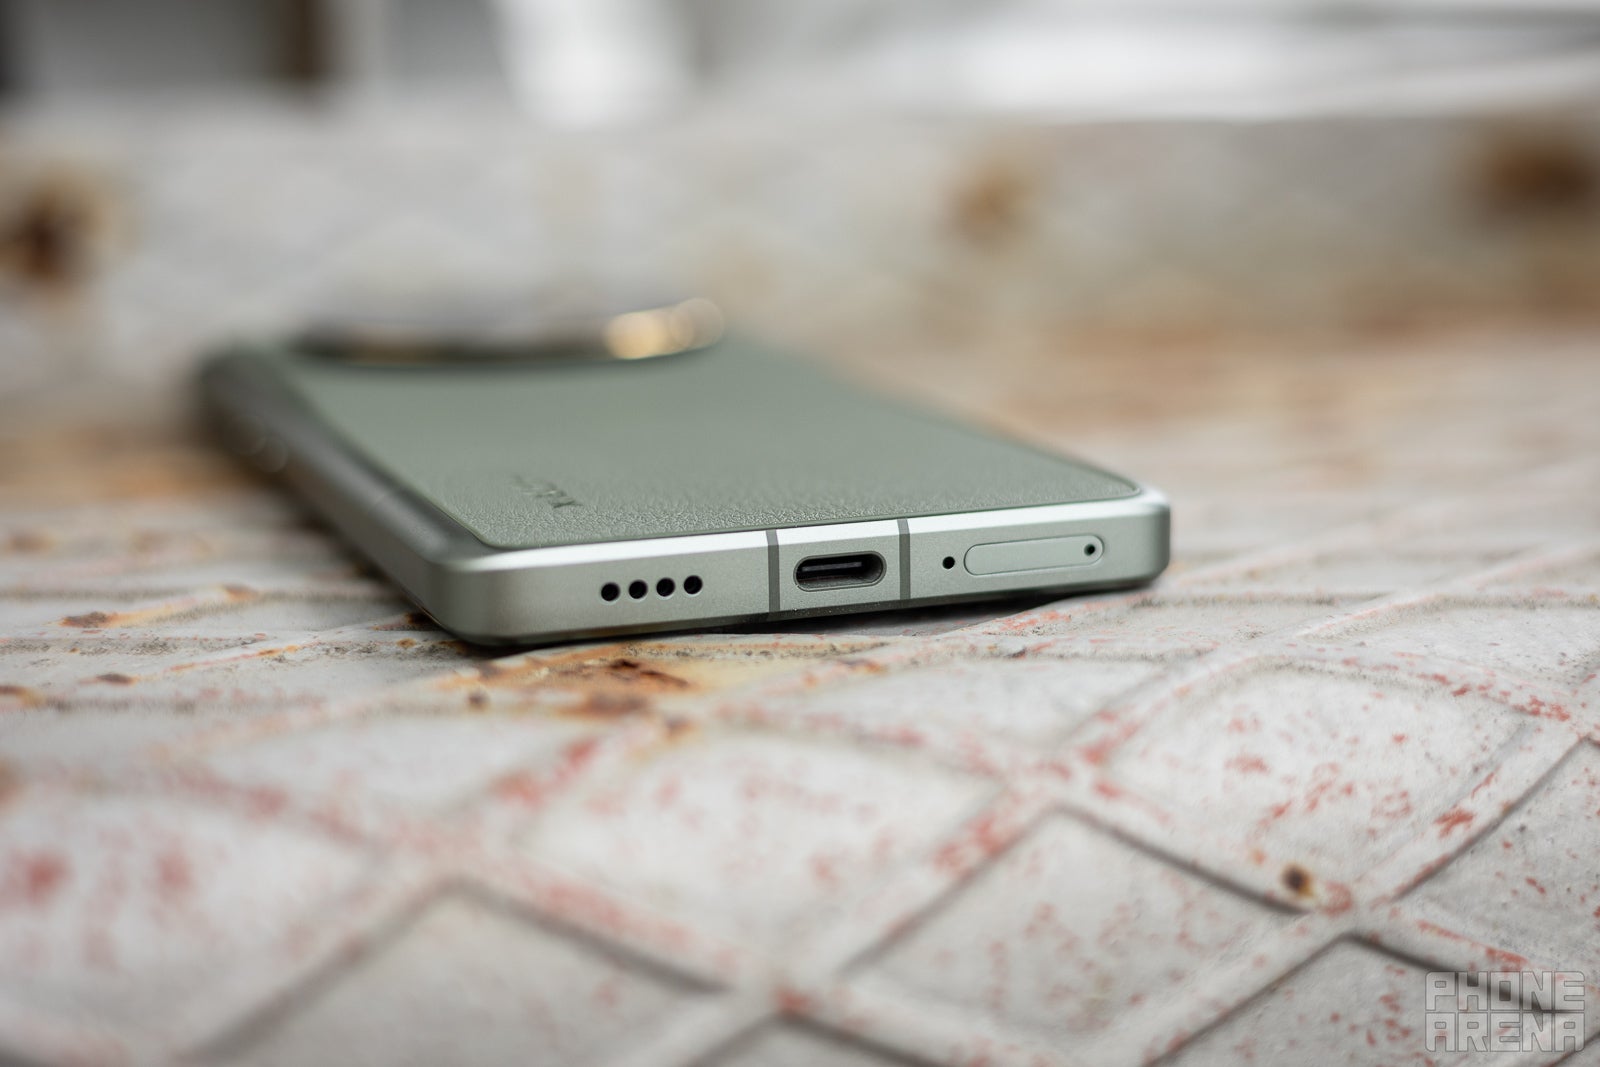 Xiaomi 13 Ultra Review: Mobile Photography Powerhouse